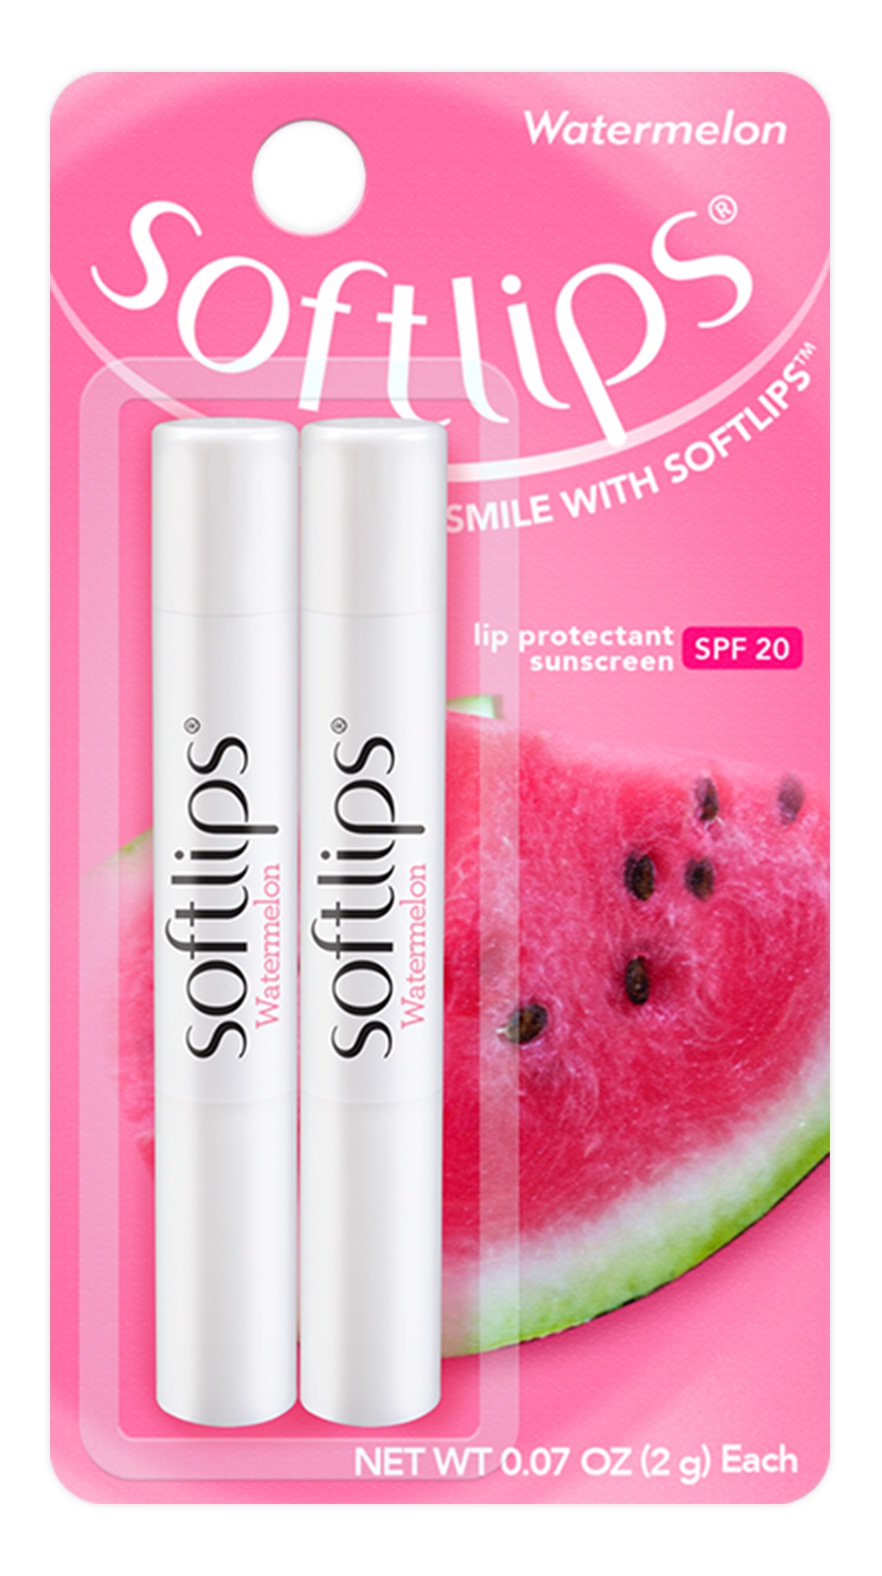 Softlips Watermelon Slim Sticks